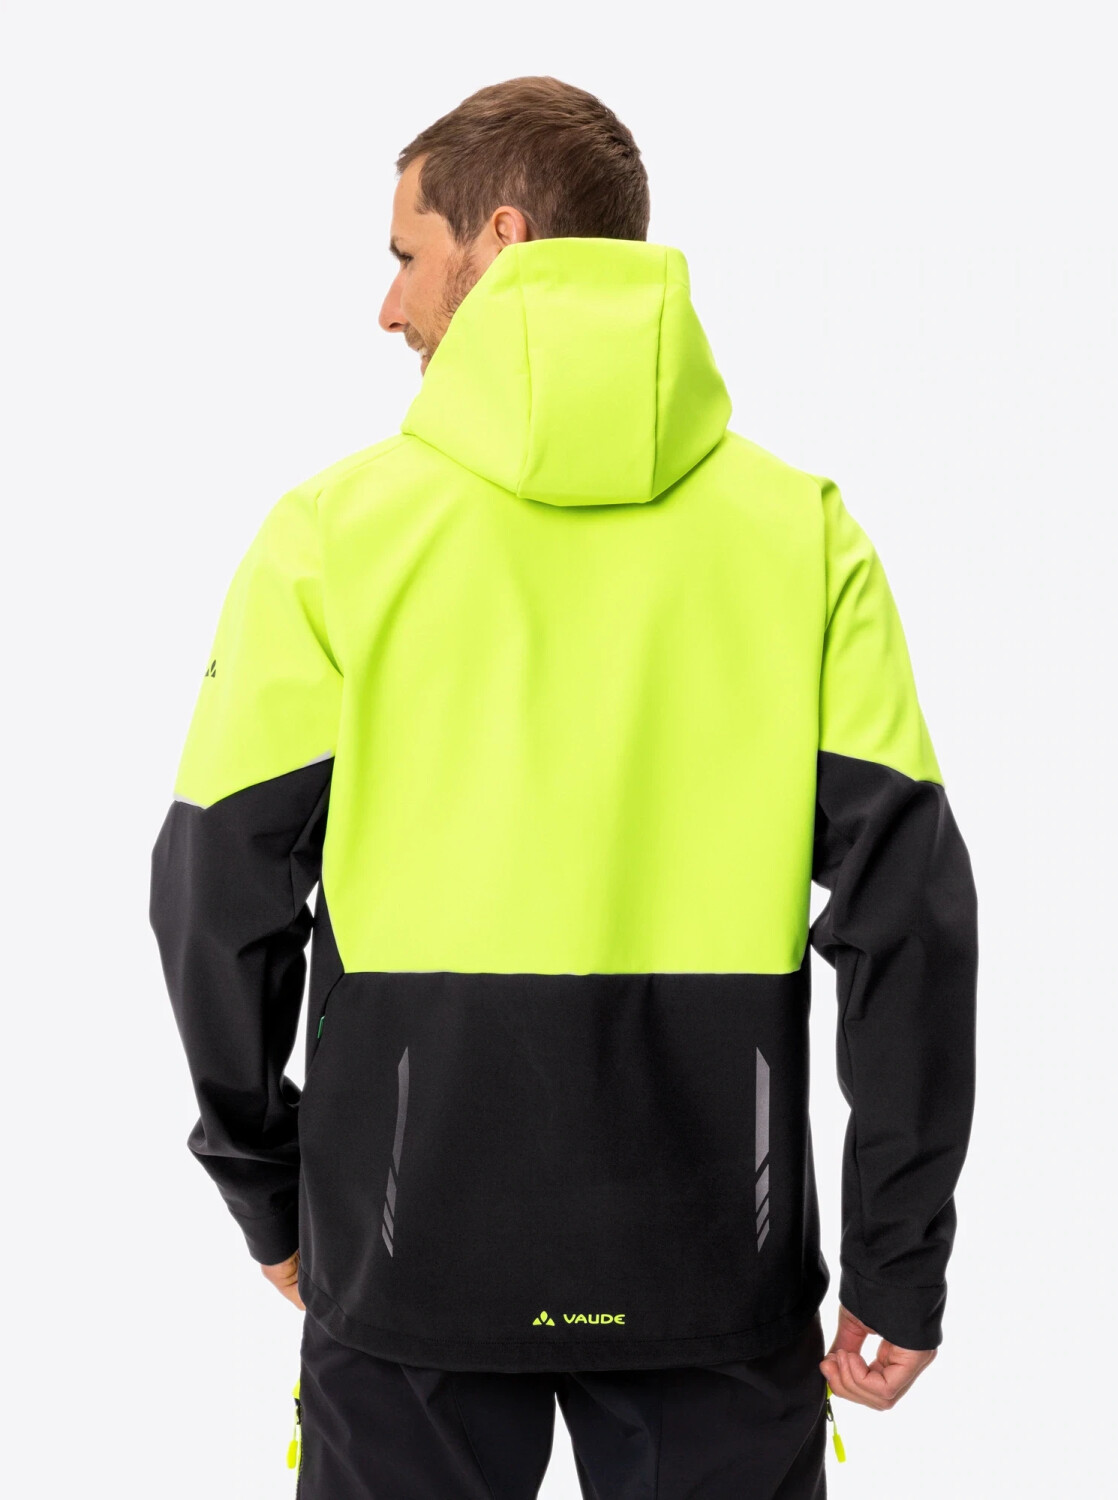 Softshell Preisvergleich Qimsa | VAUDE 89,95 Men\'s Jacket yellow neon ab € bei